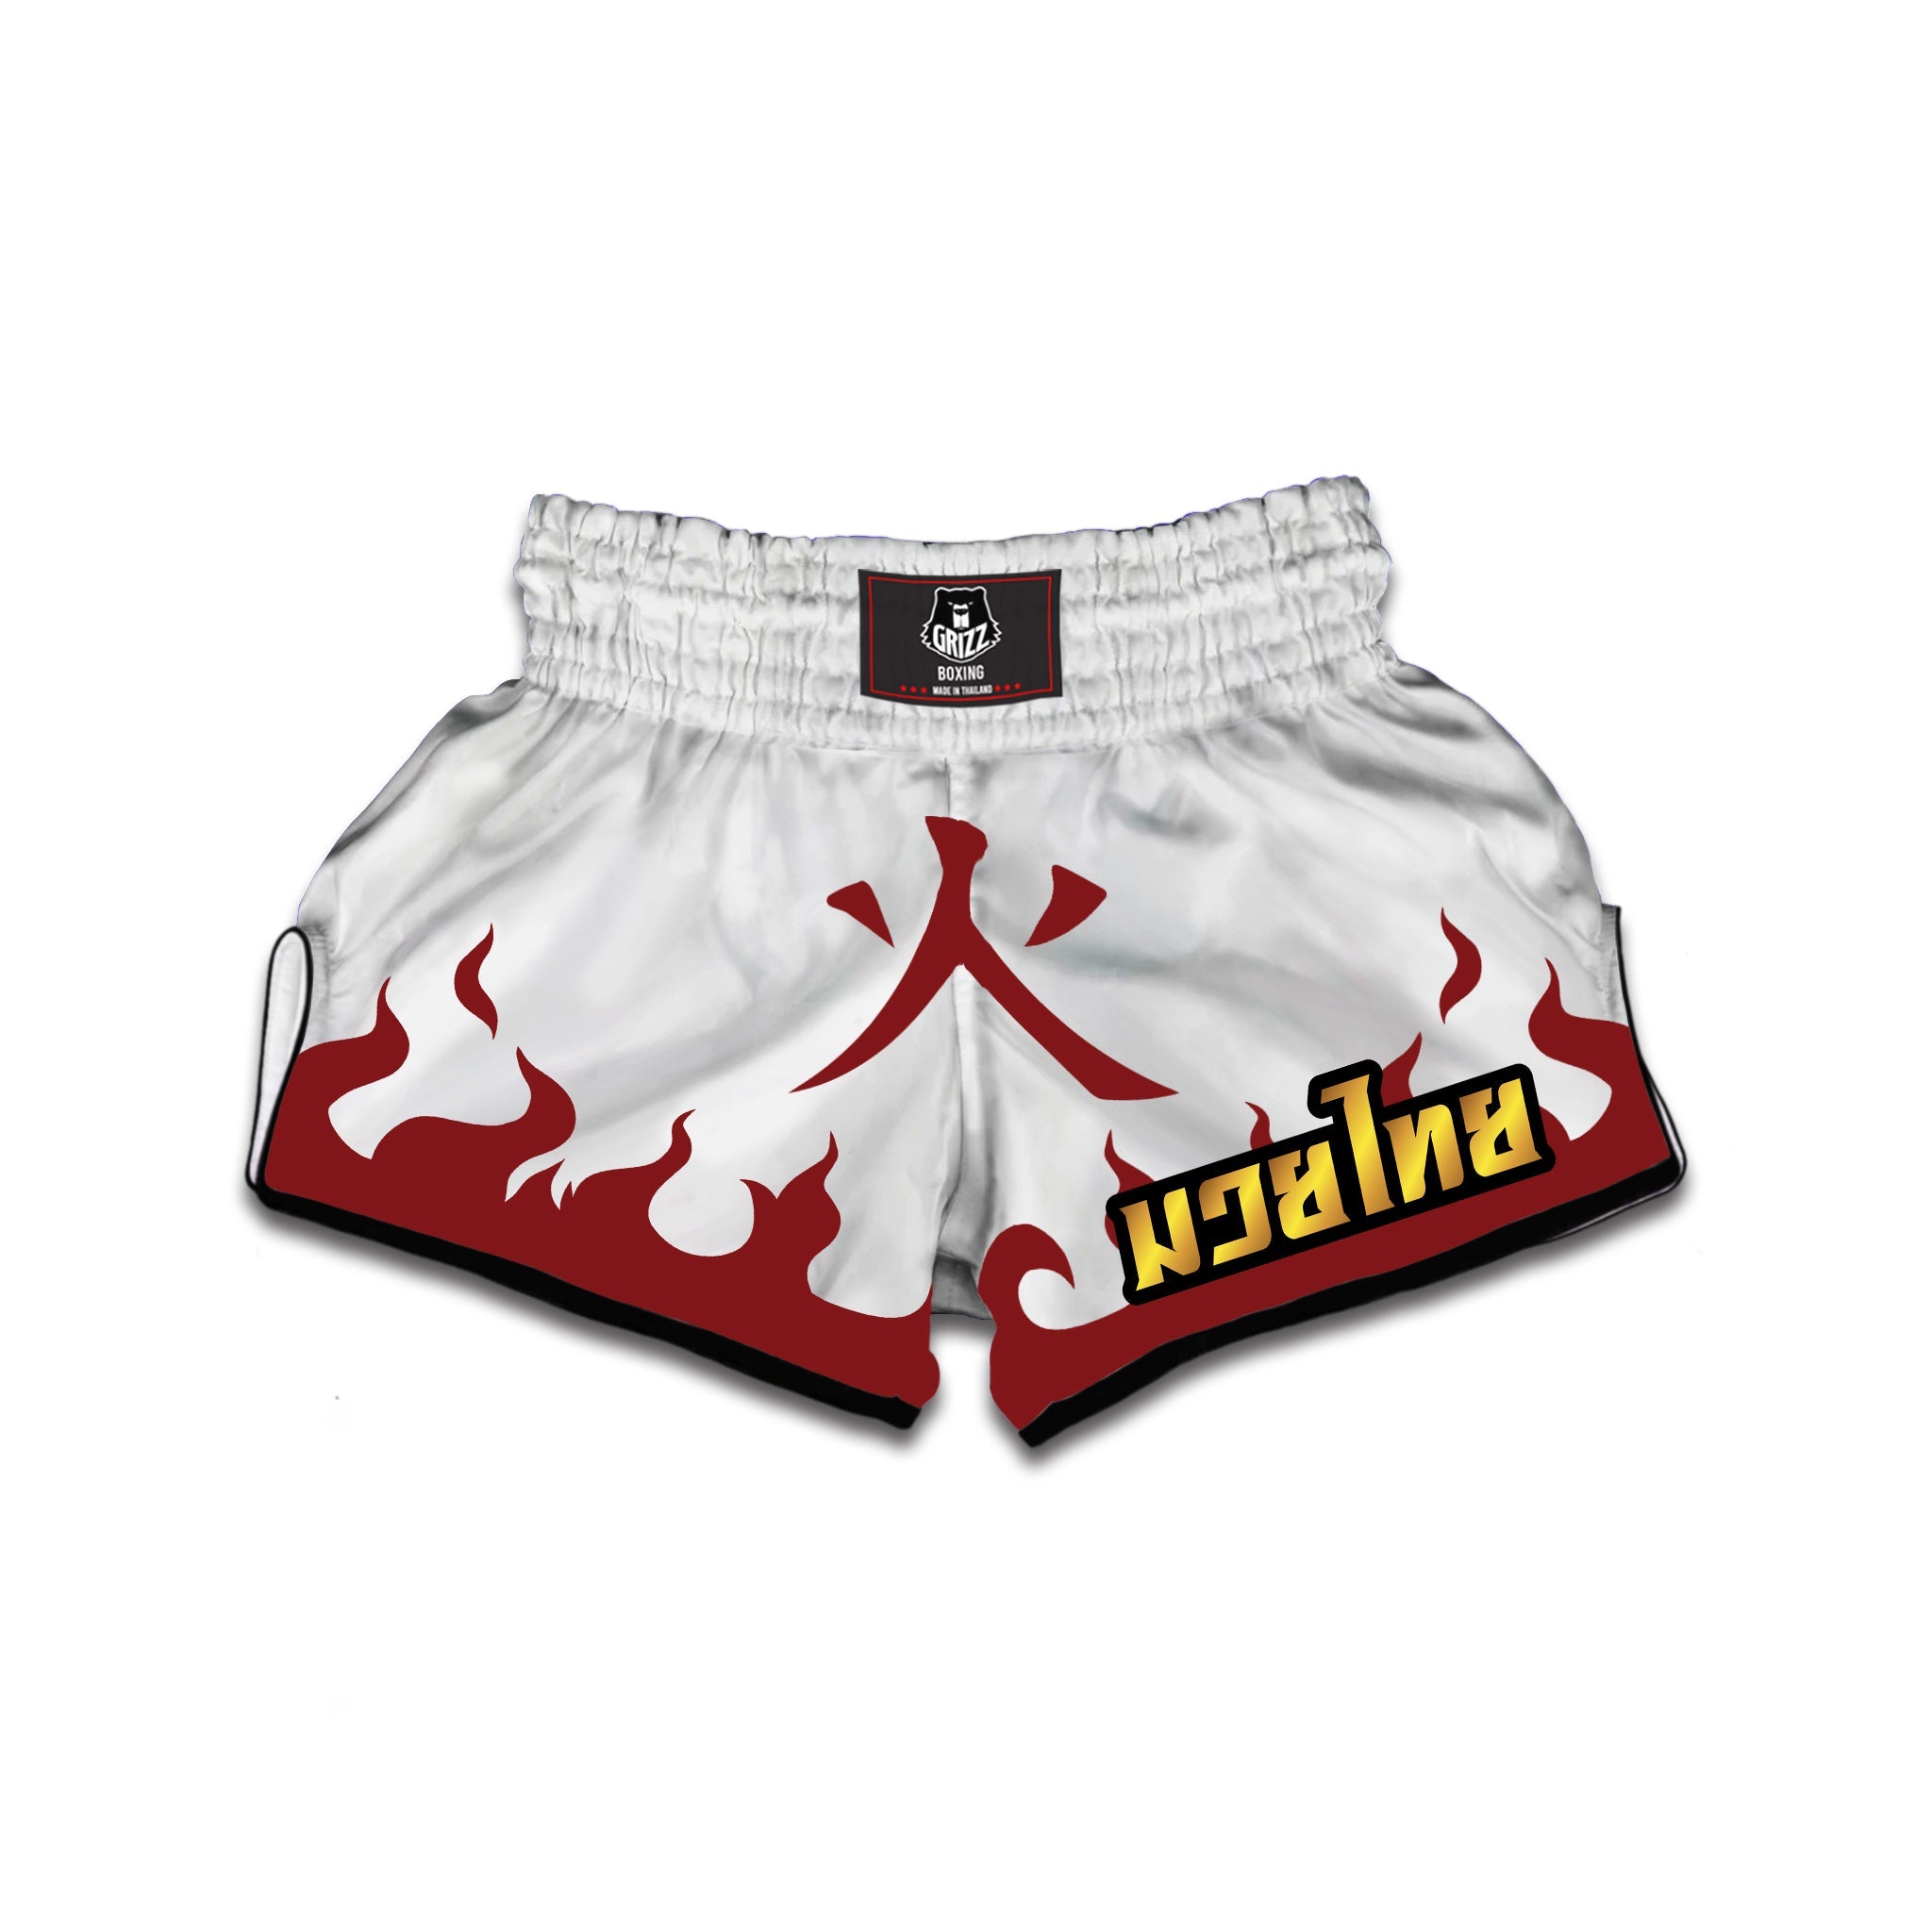 Bangarang Muay Thai Shorts - Roses – Superare Fight Shop